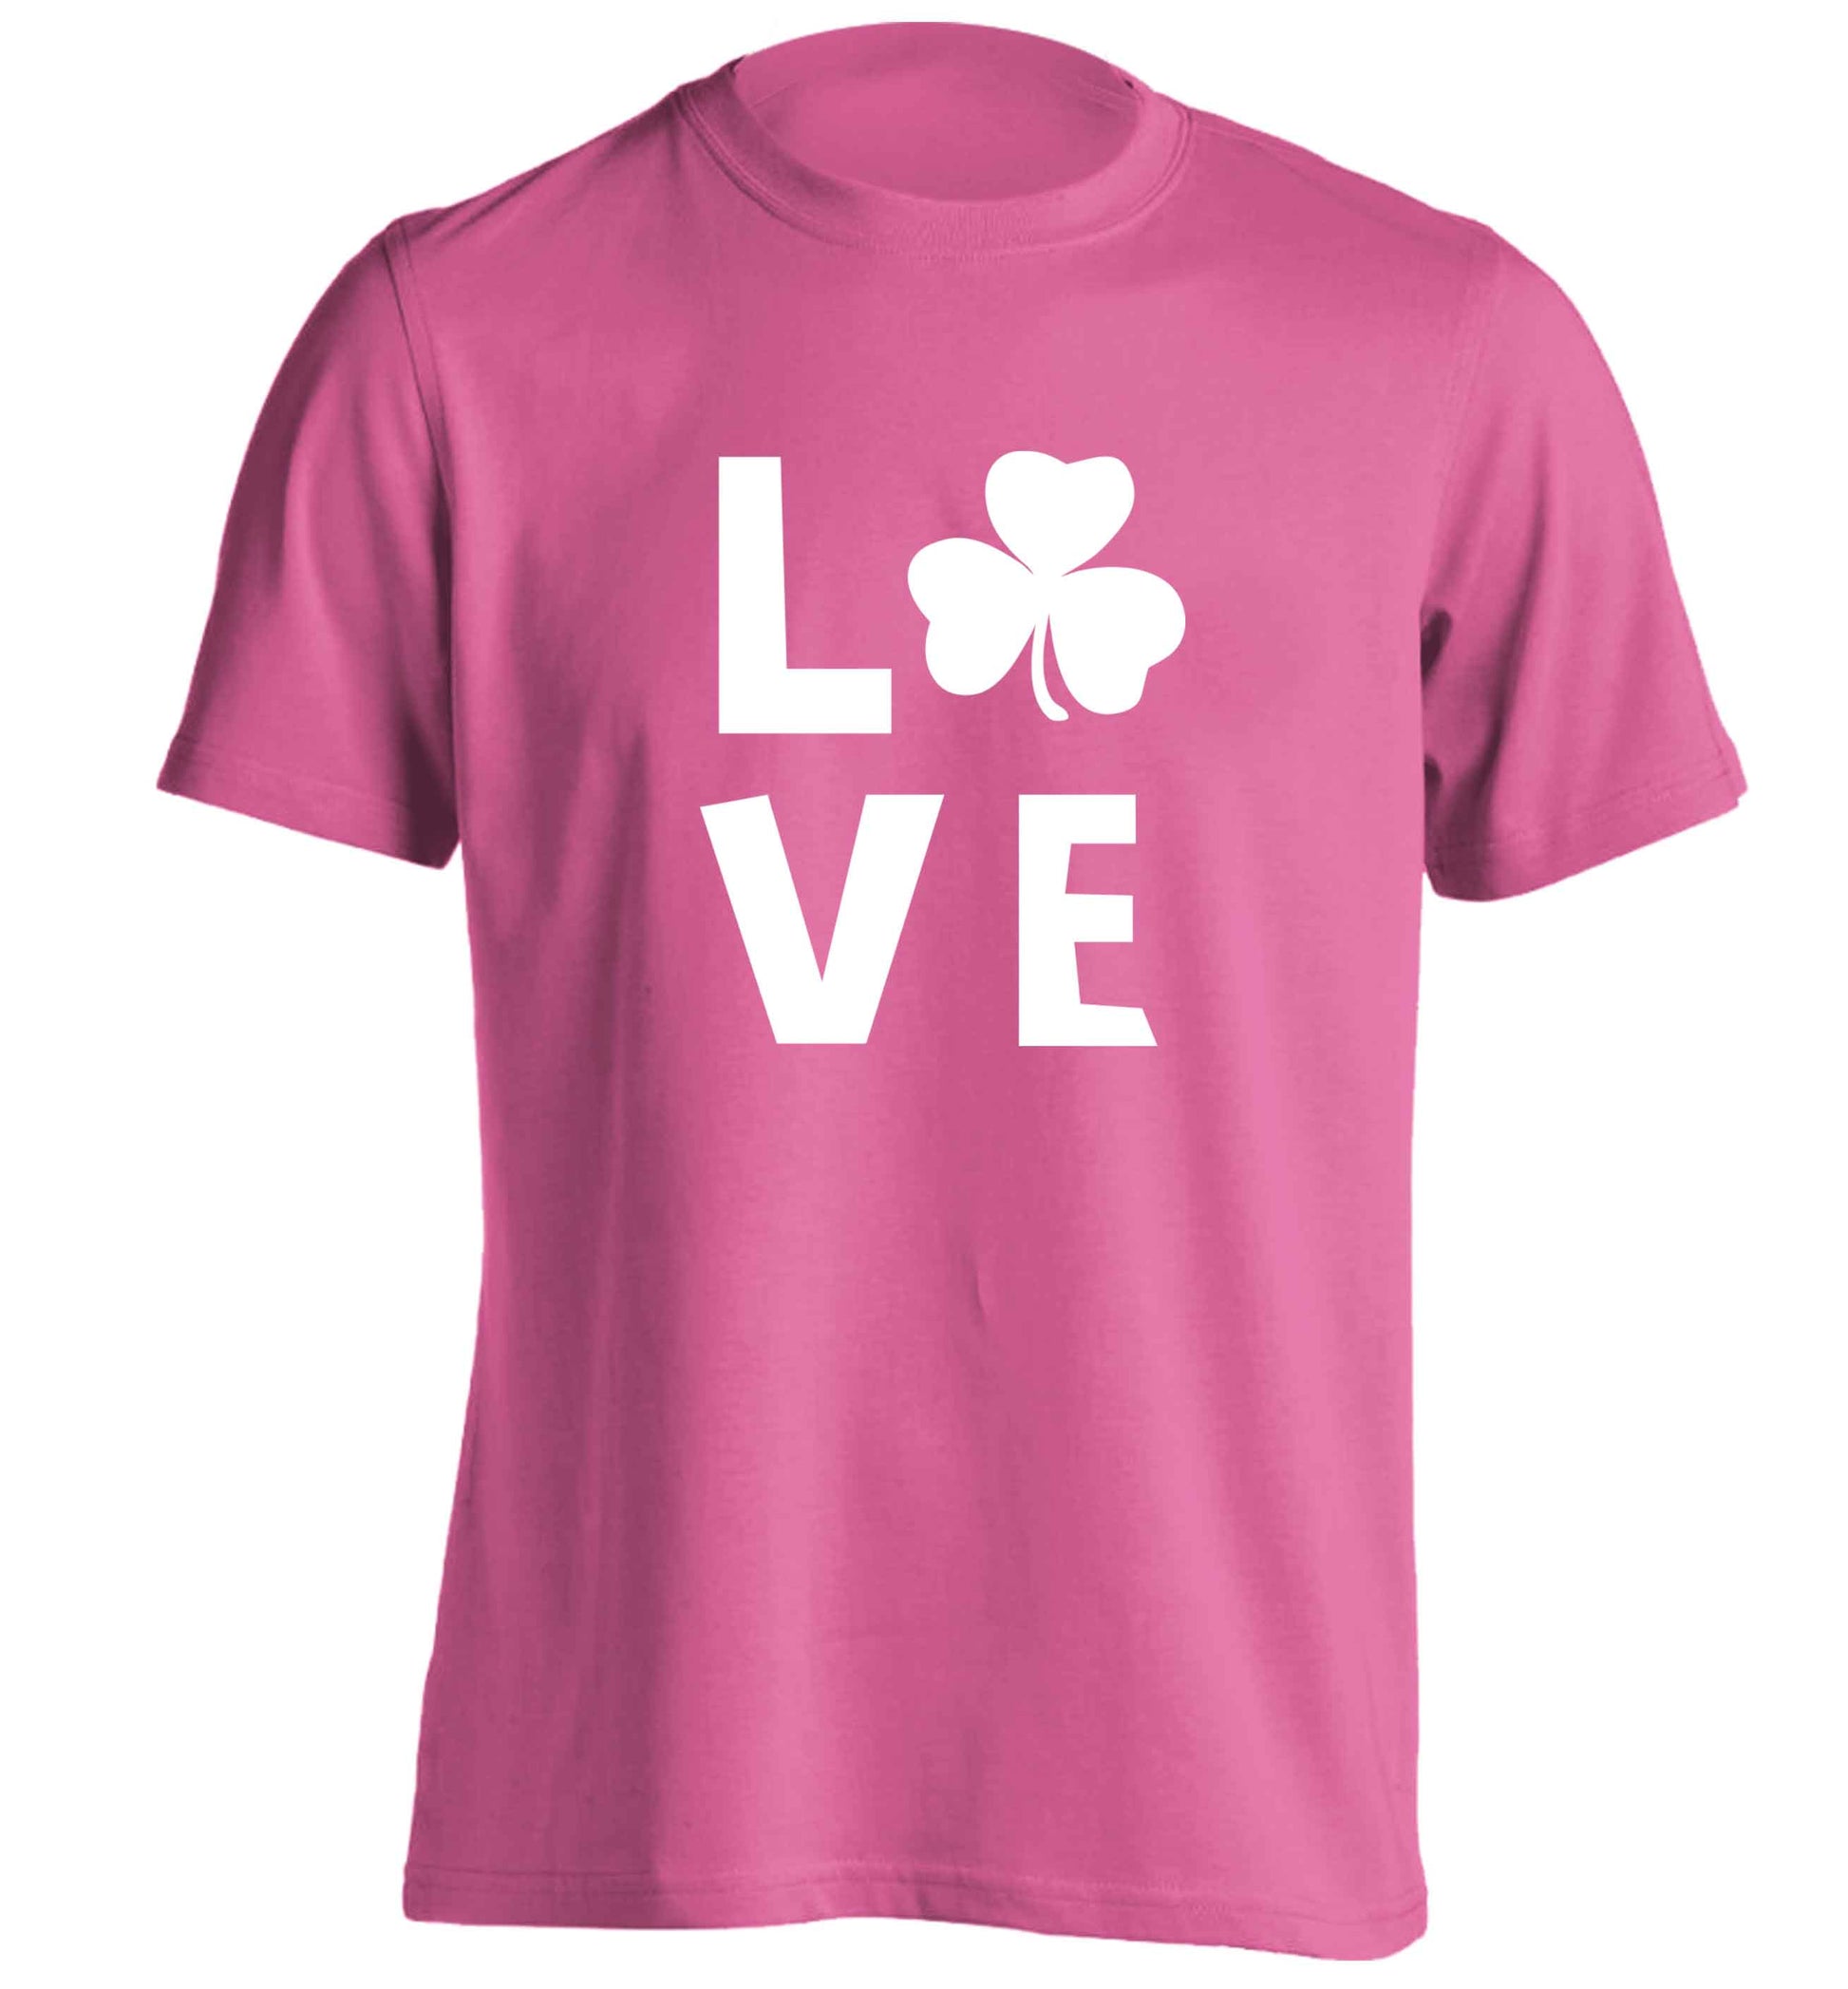 Shamrock love adults unisex pink Tshirt 2XL